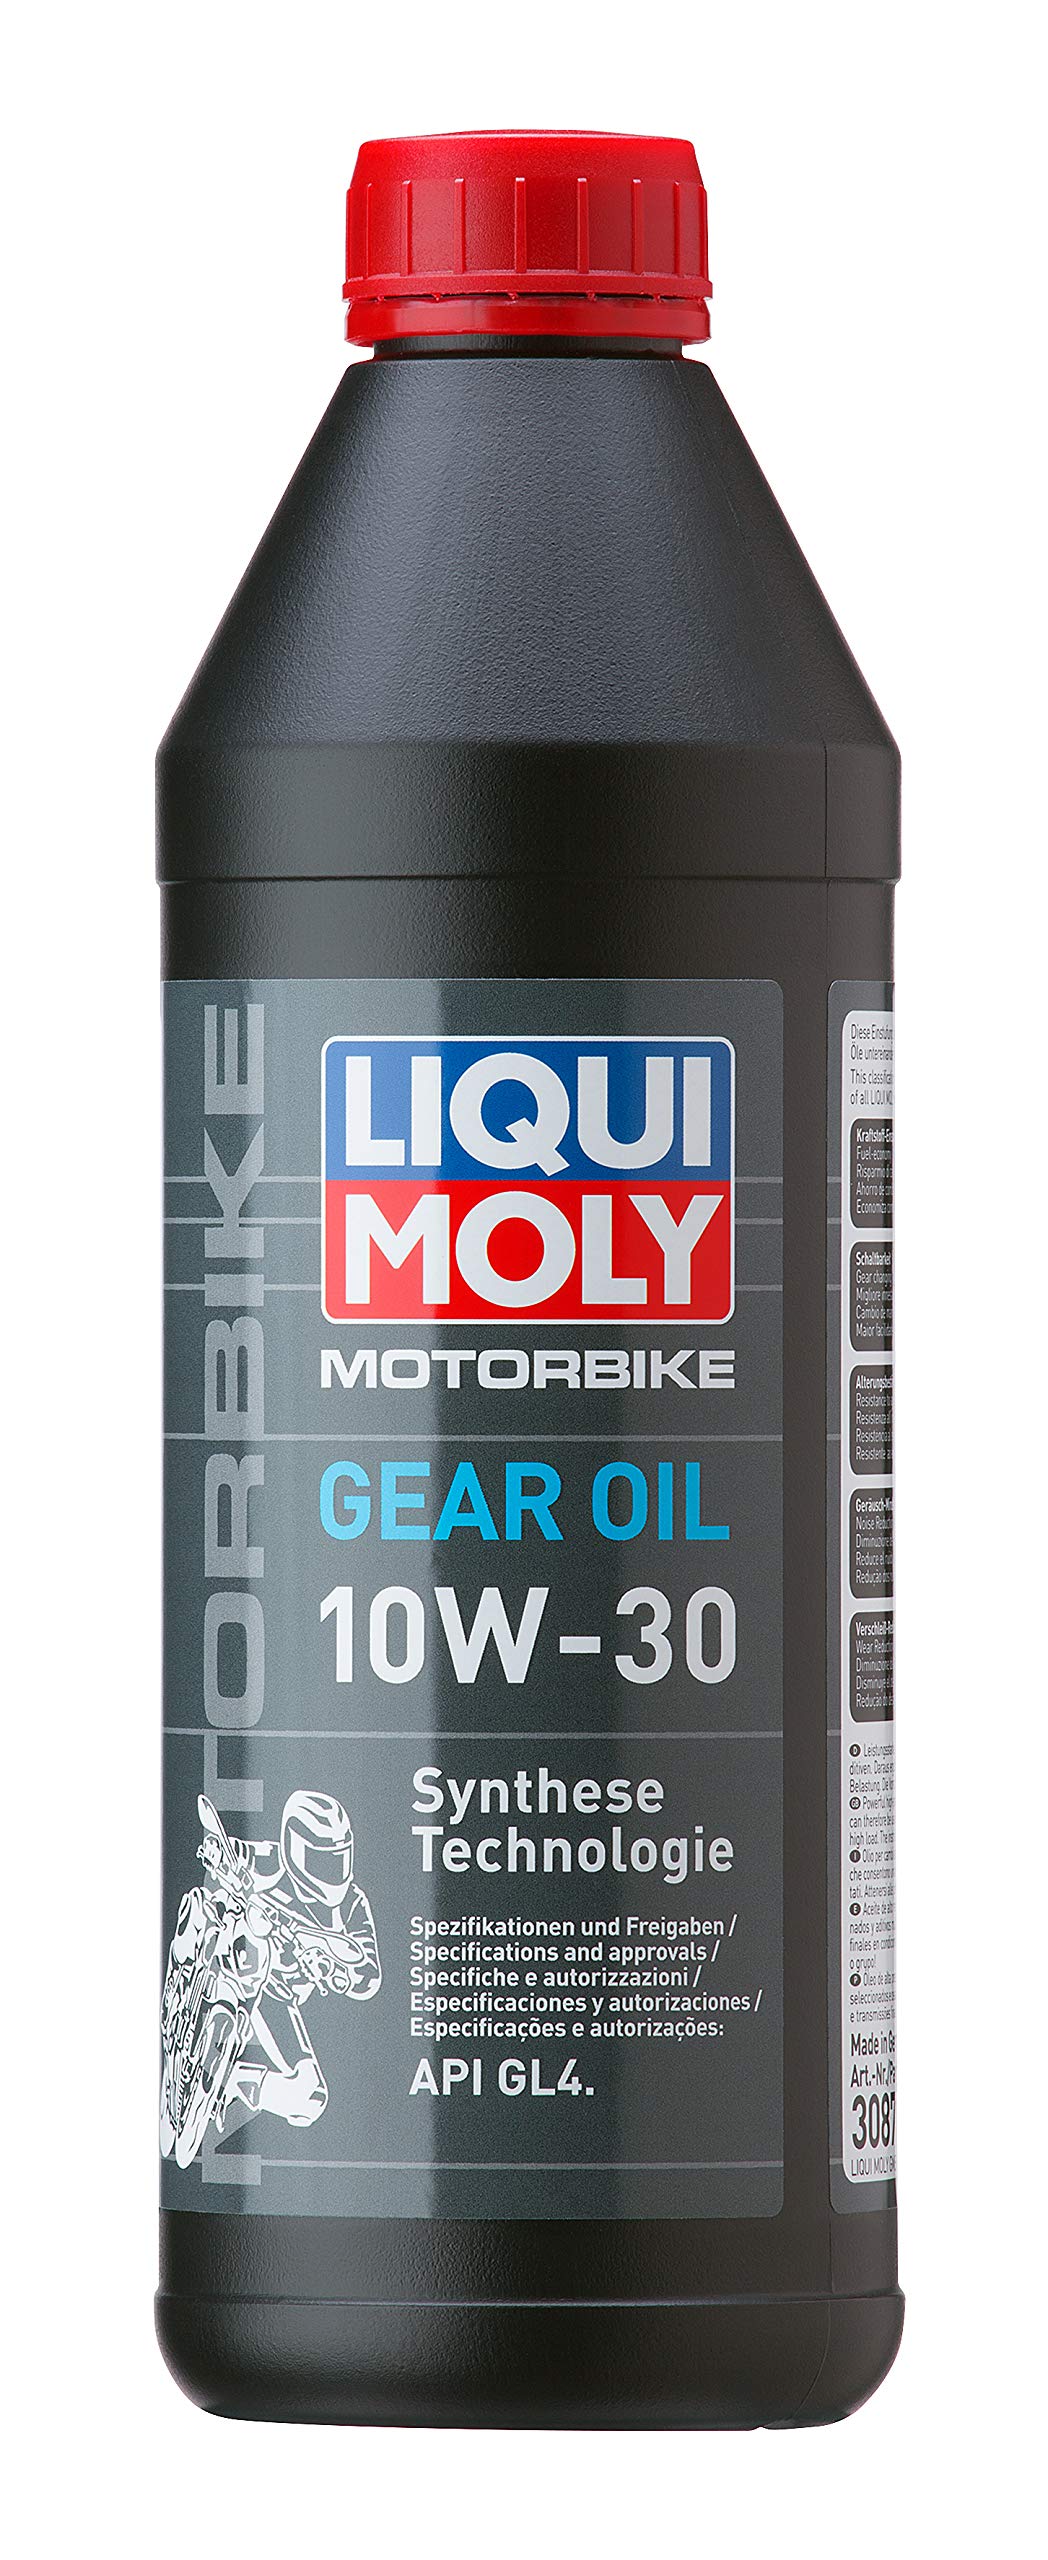 LIQUI MOLY Motorbike Gear Oil 10W-30 | 1 L | Motorrad Getriebeöl | Art.-Nr.: 3087 von Liqui Moly